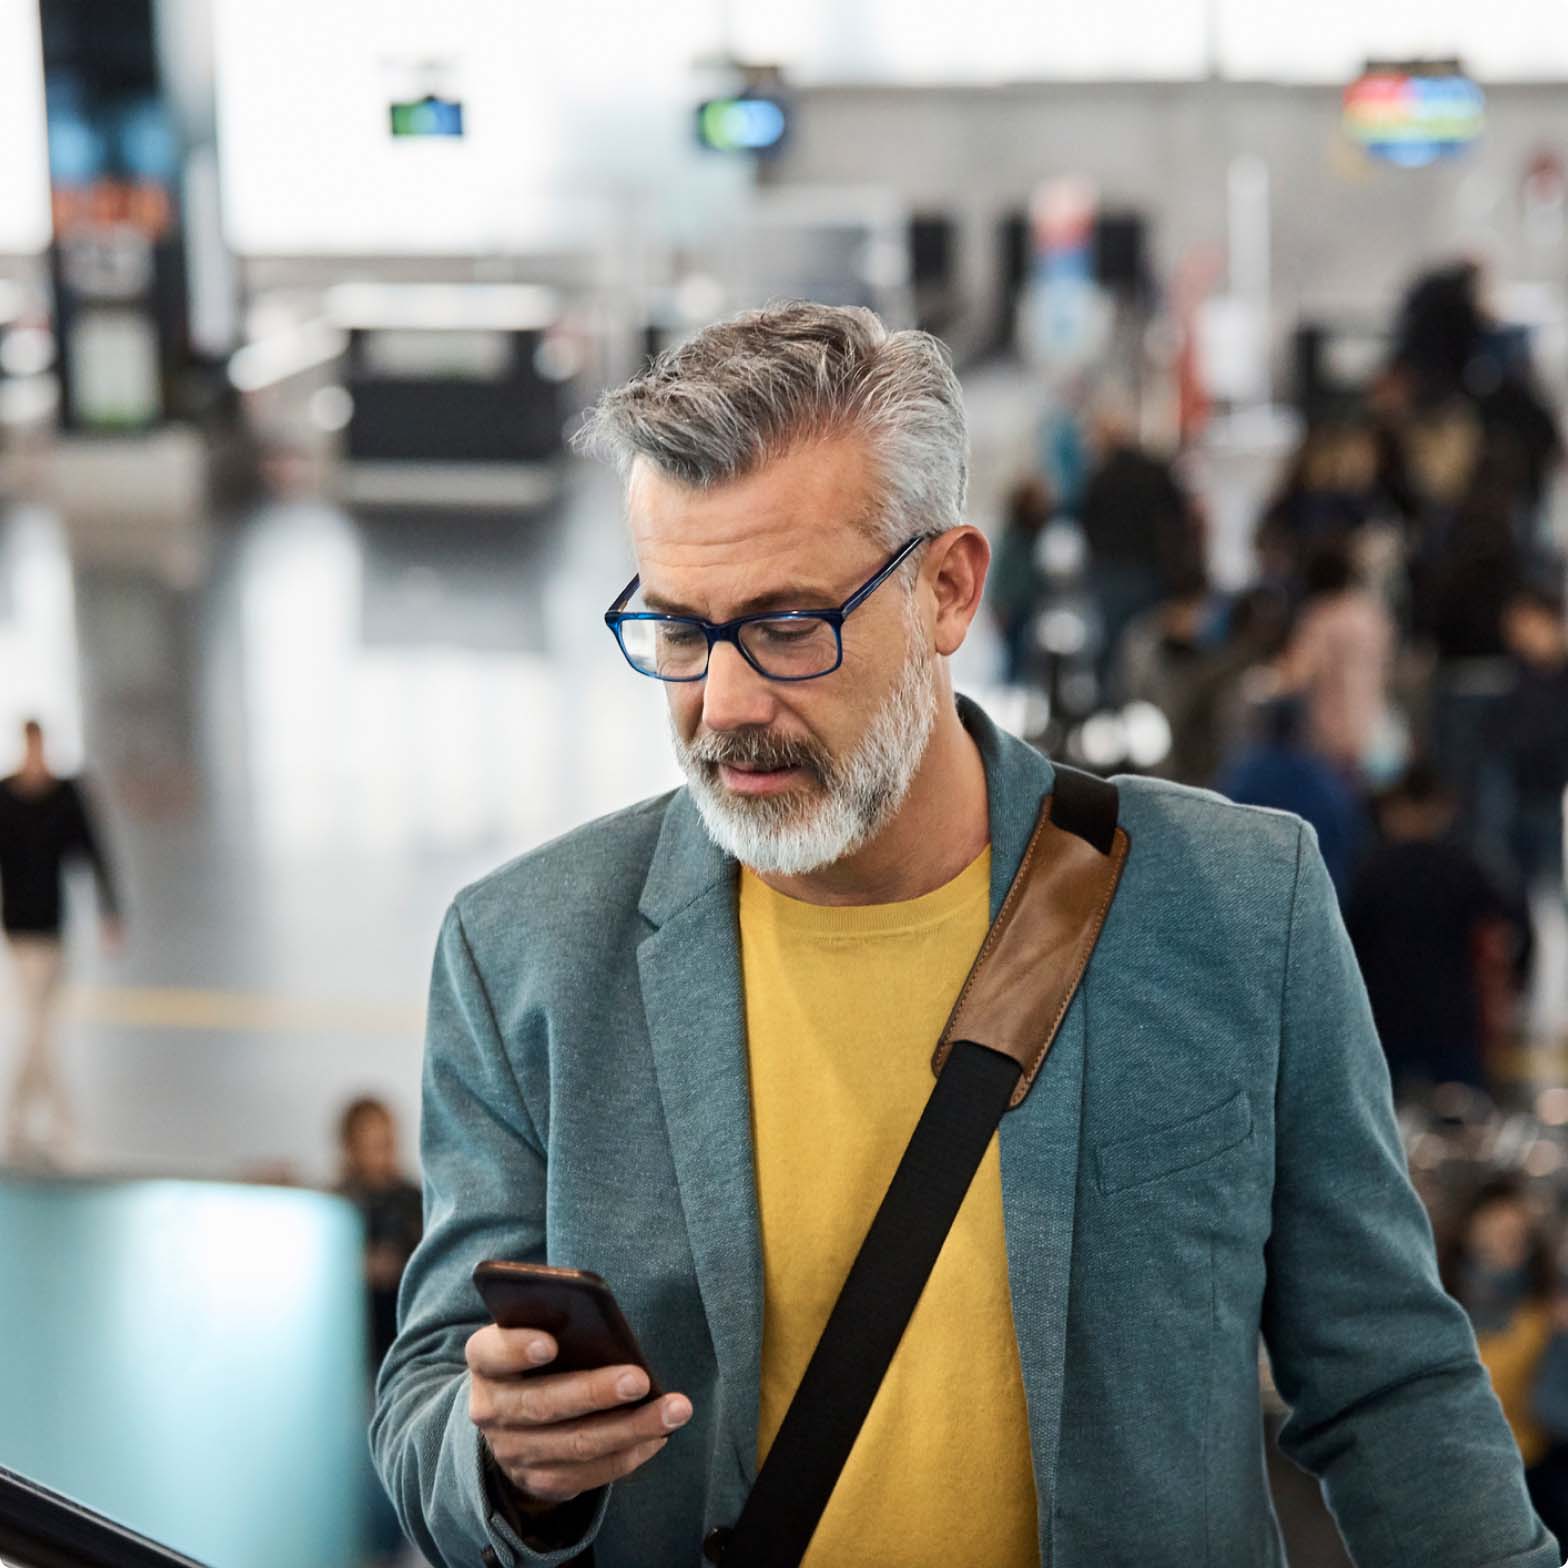 A man looking at his phone going up escalators at an airport